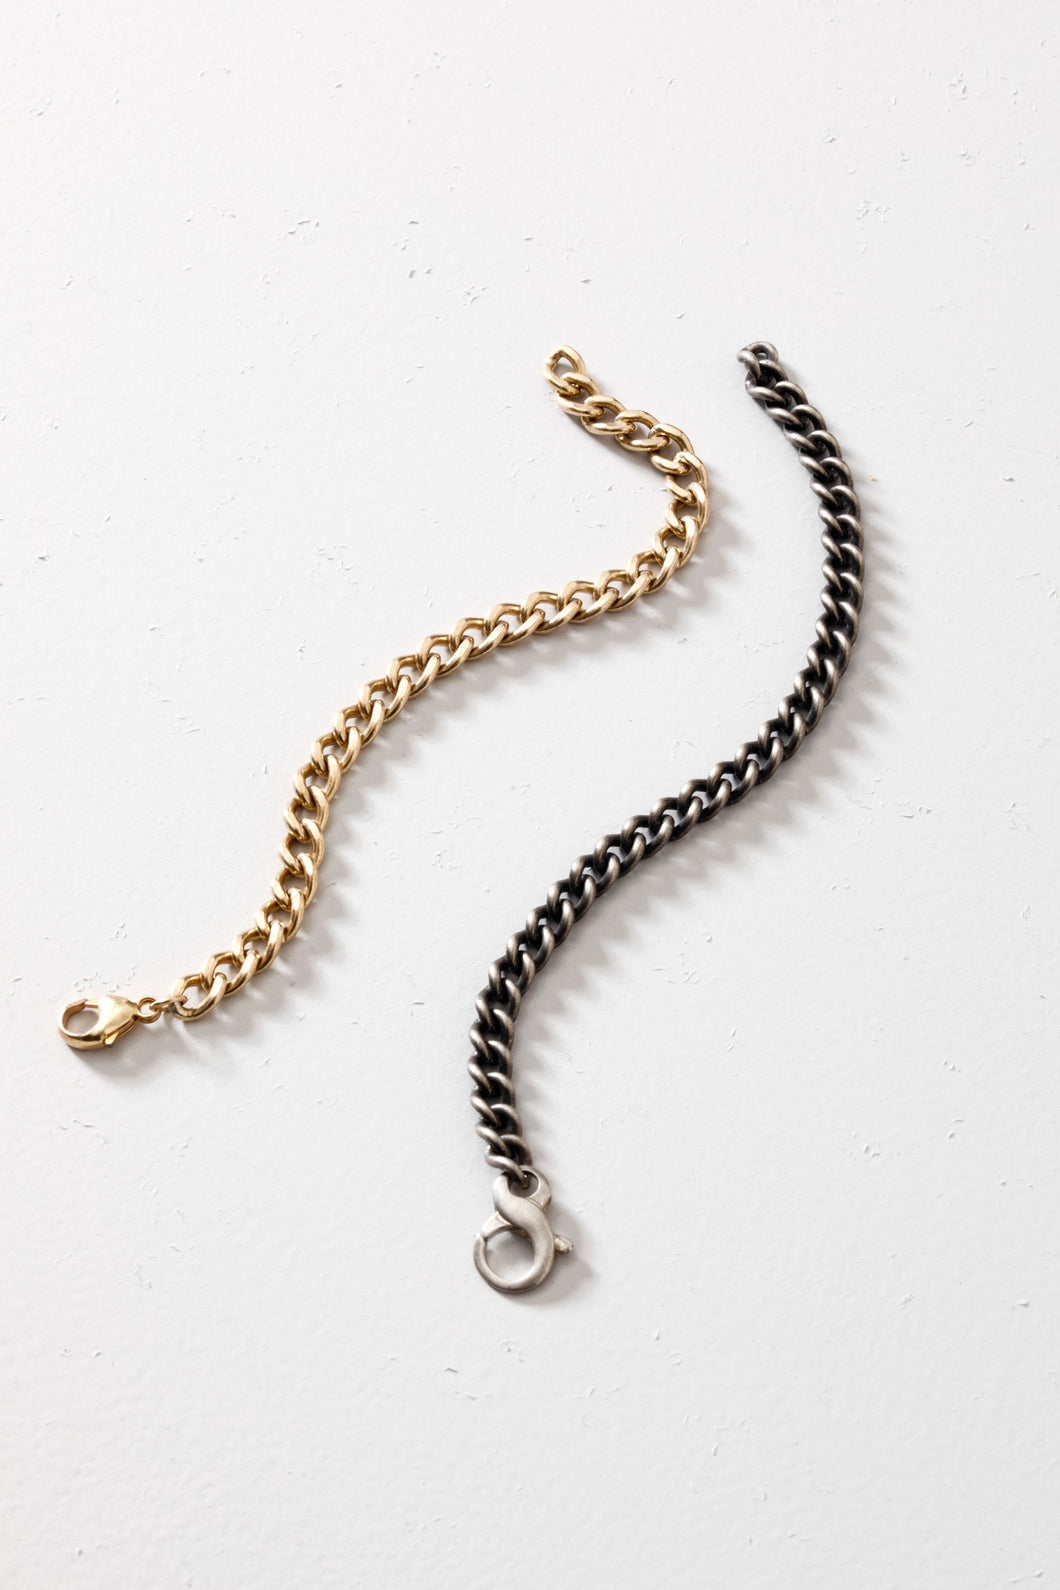 Armory Chain (Oxidized Sterling Silver) Bracelet